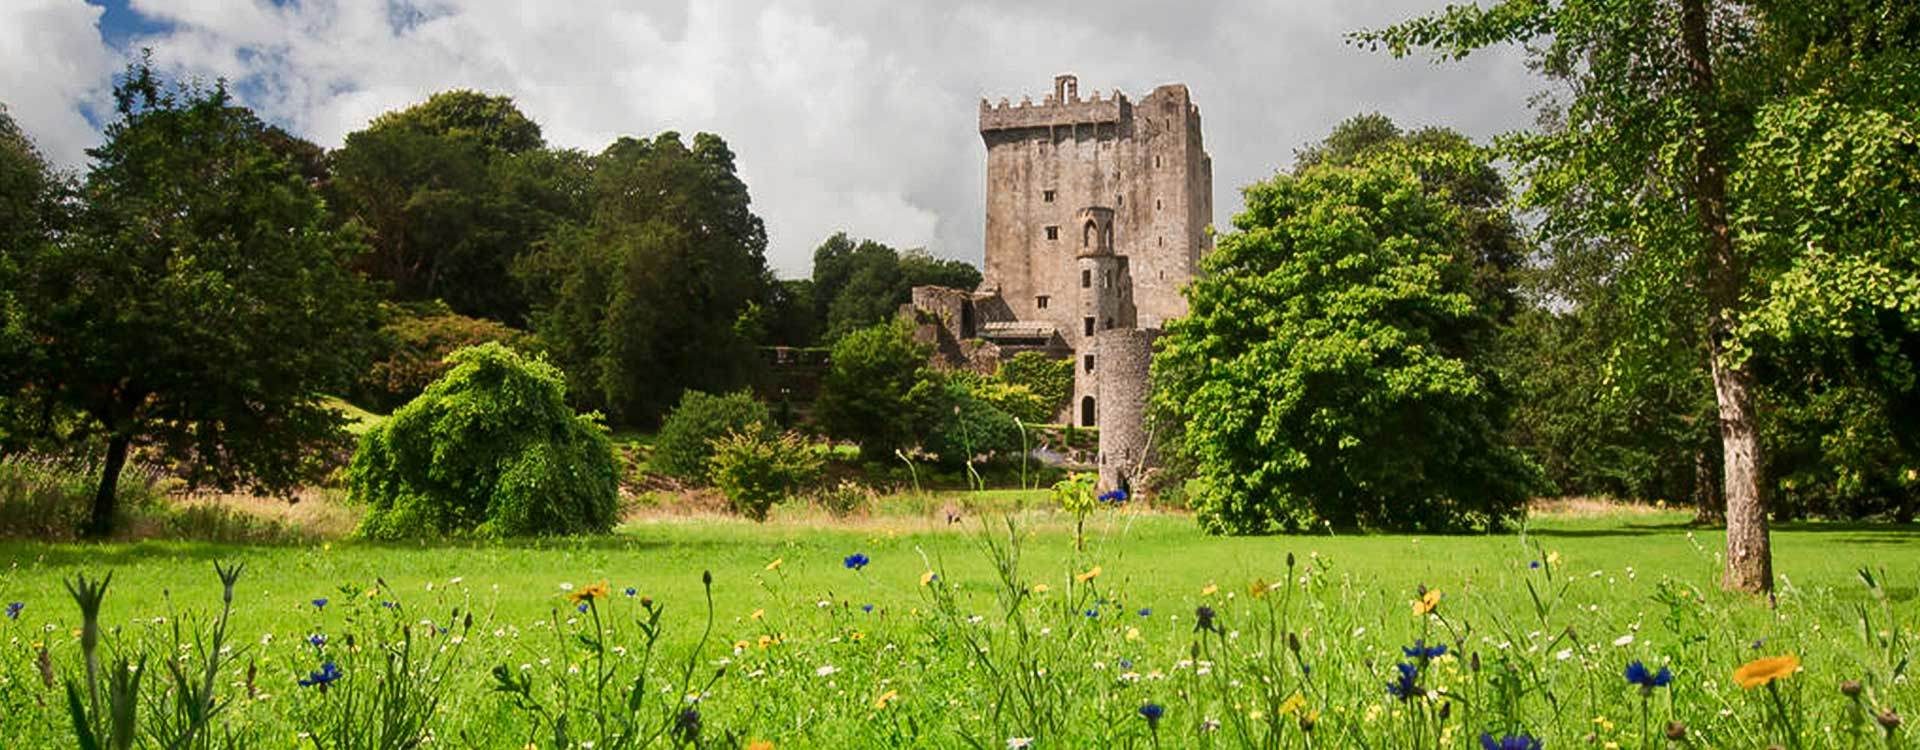 Blarney Castle Day Tour from Dublin Including Rock of Cashel & Cork City